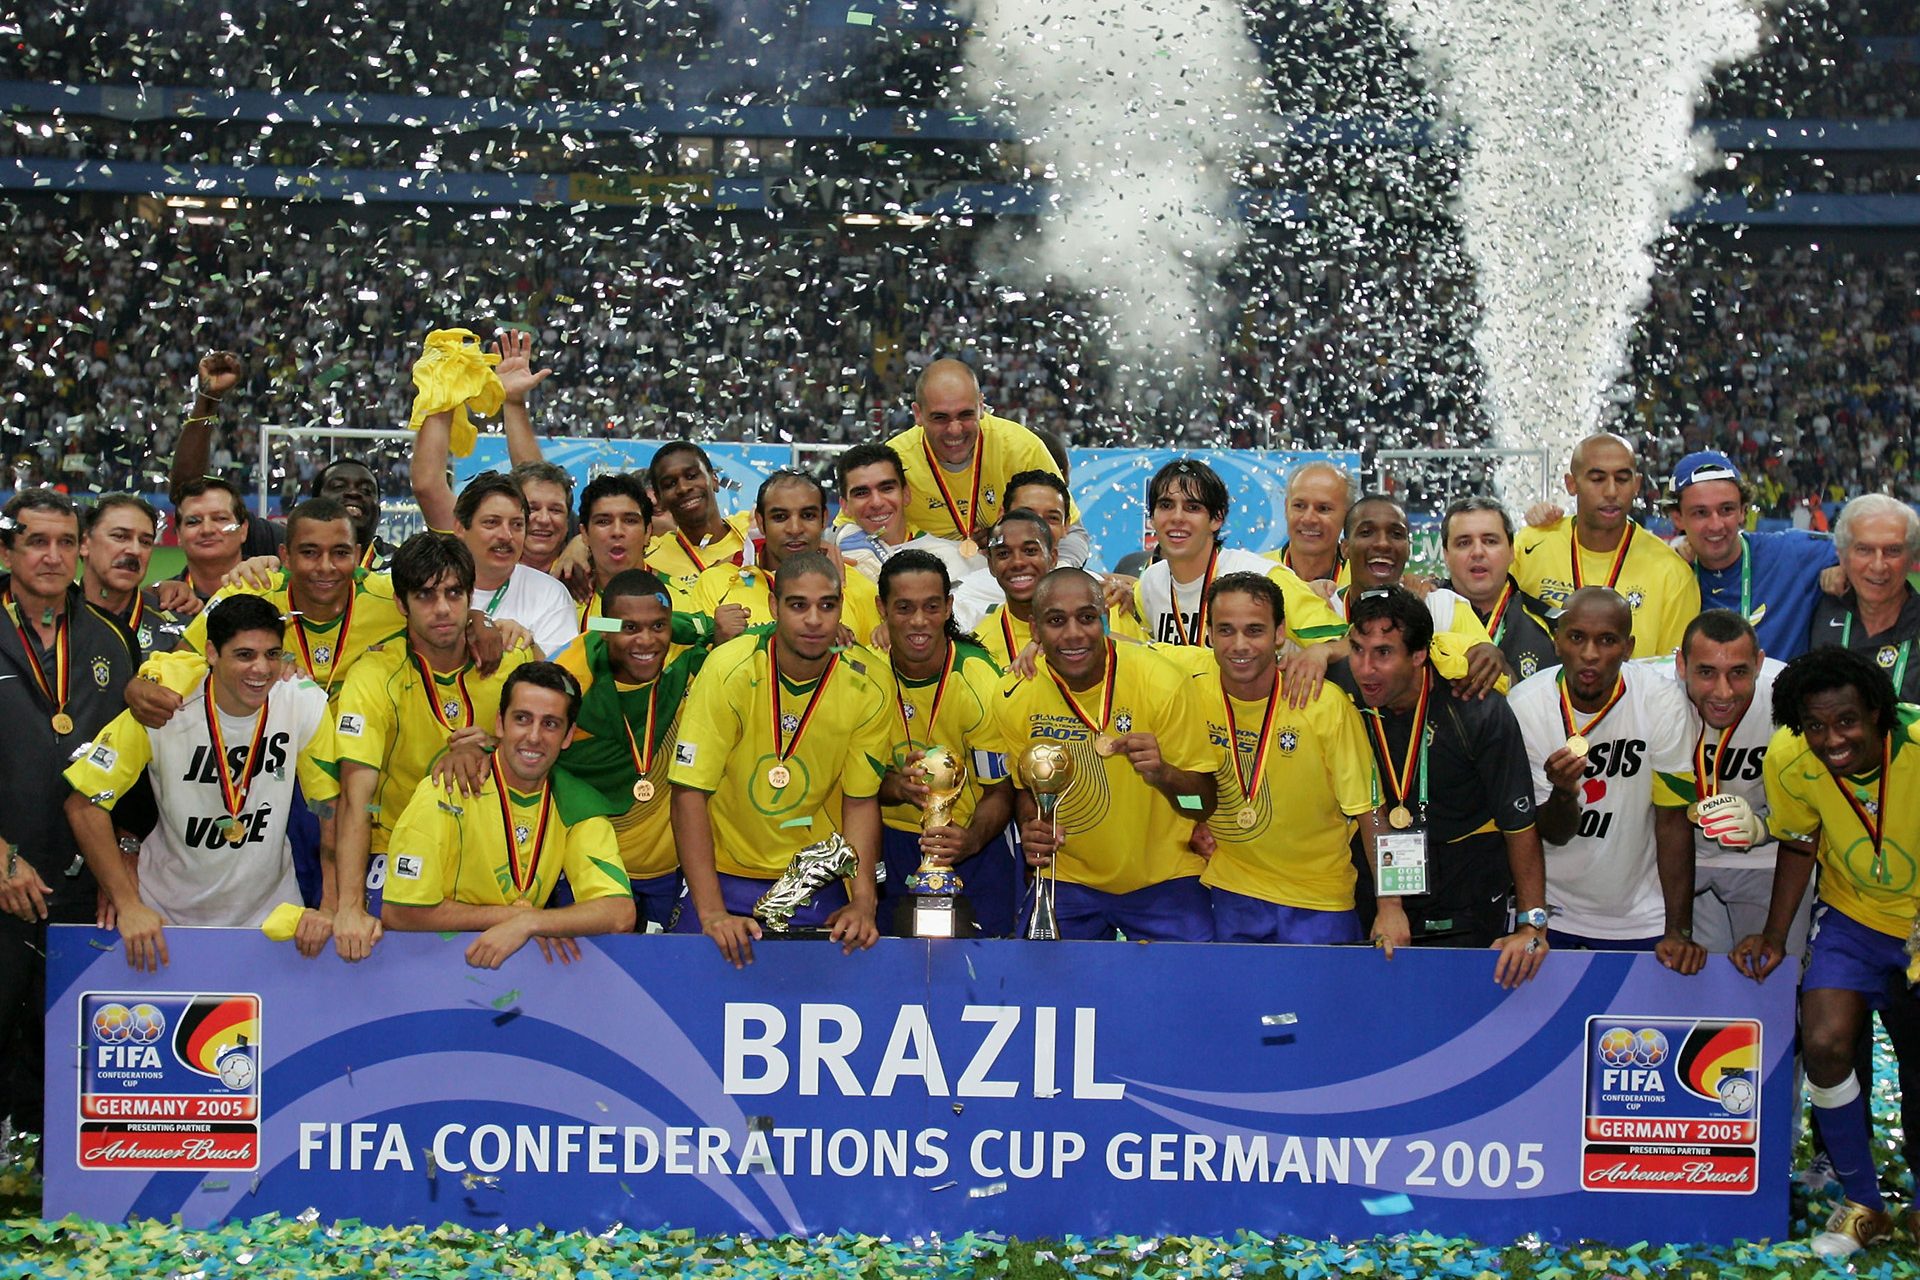 The 2005 Confederations Cup